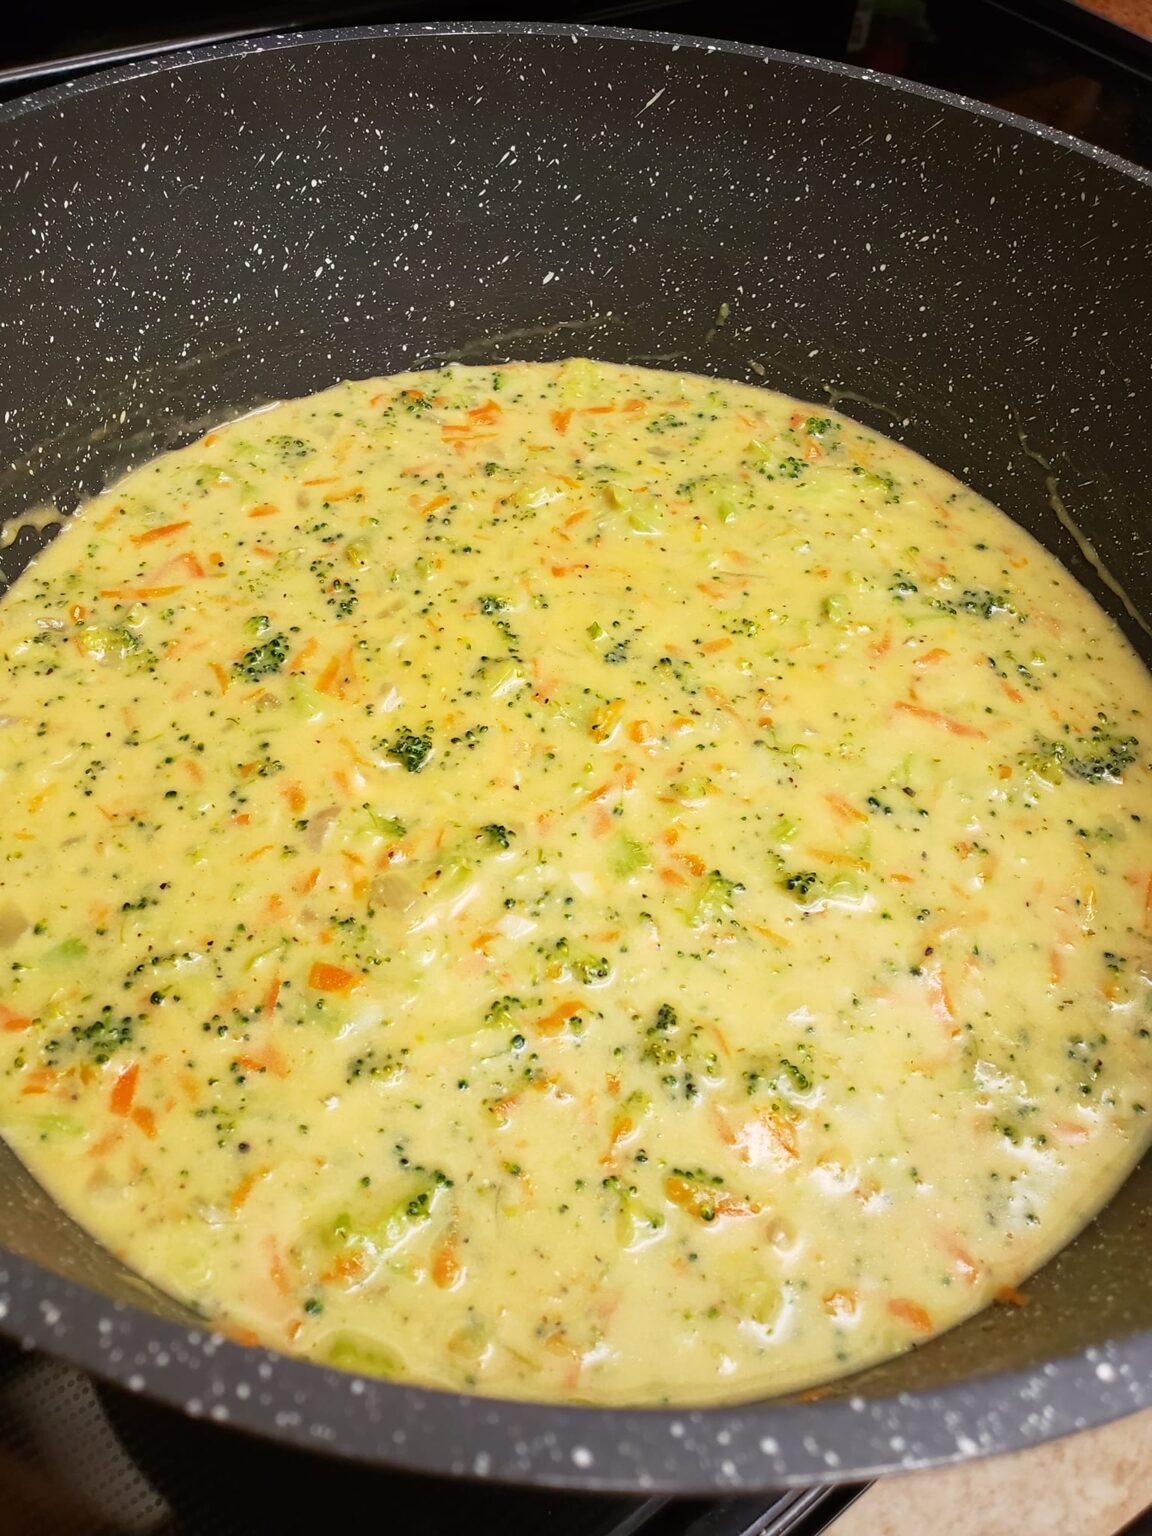 Broccoli Cheddar Soup - All easy recipes